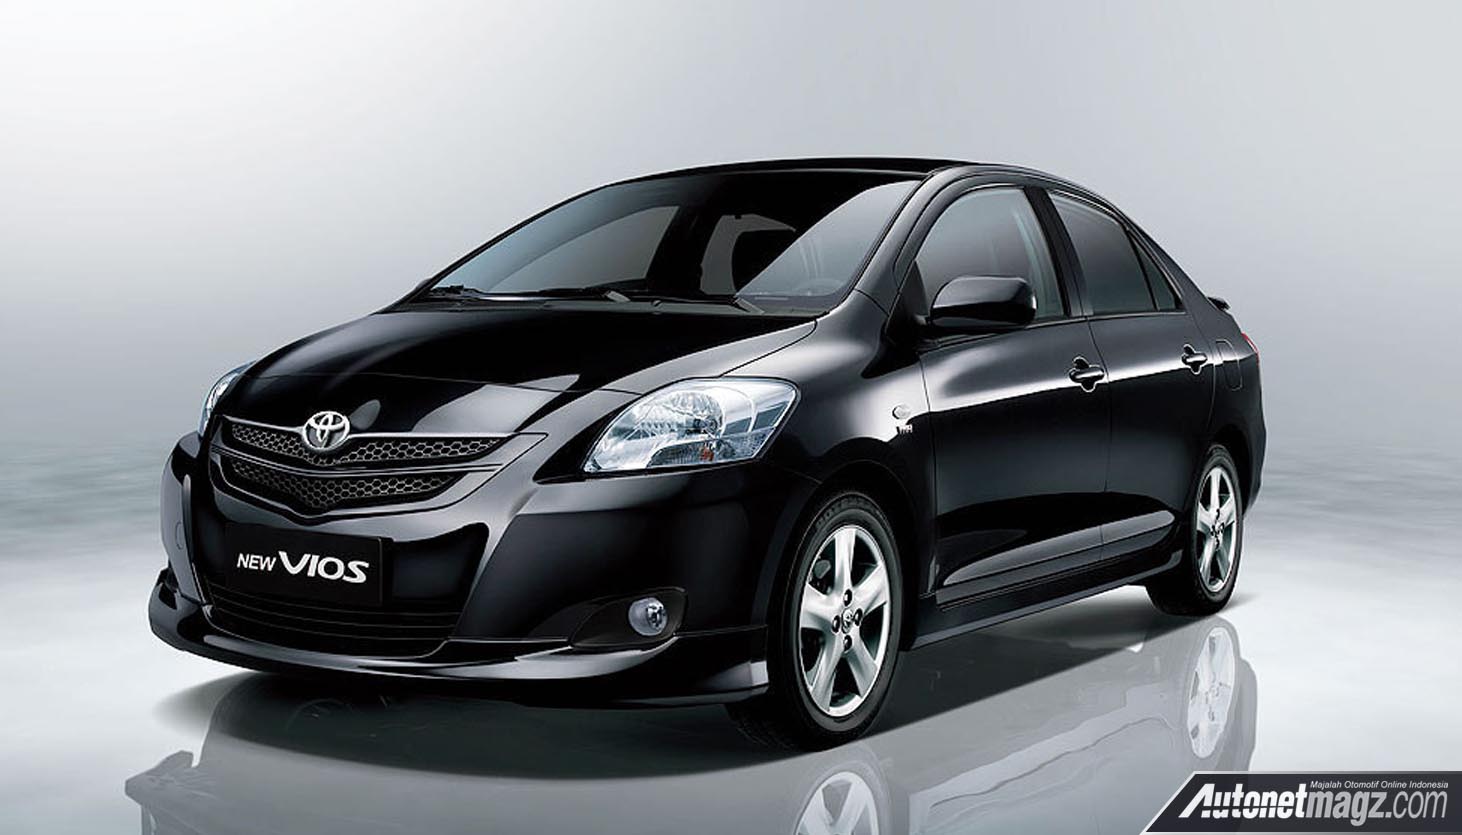 Toyota Vios TRD 2012 | AutonetMagz :: Review Mobil dan Motor Baru Indonesia